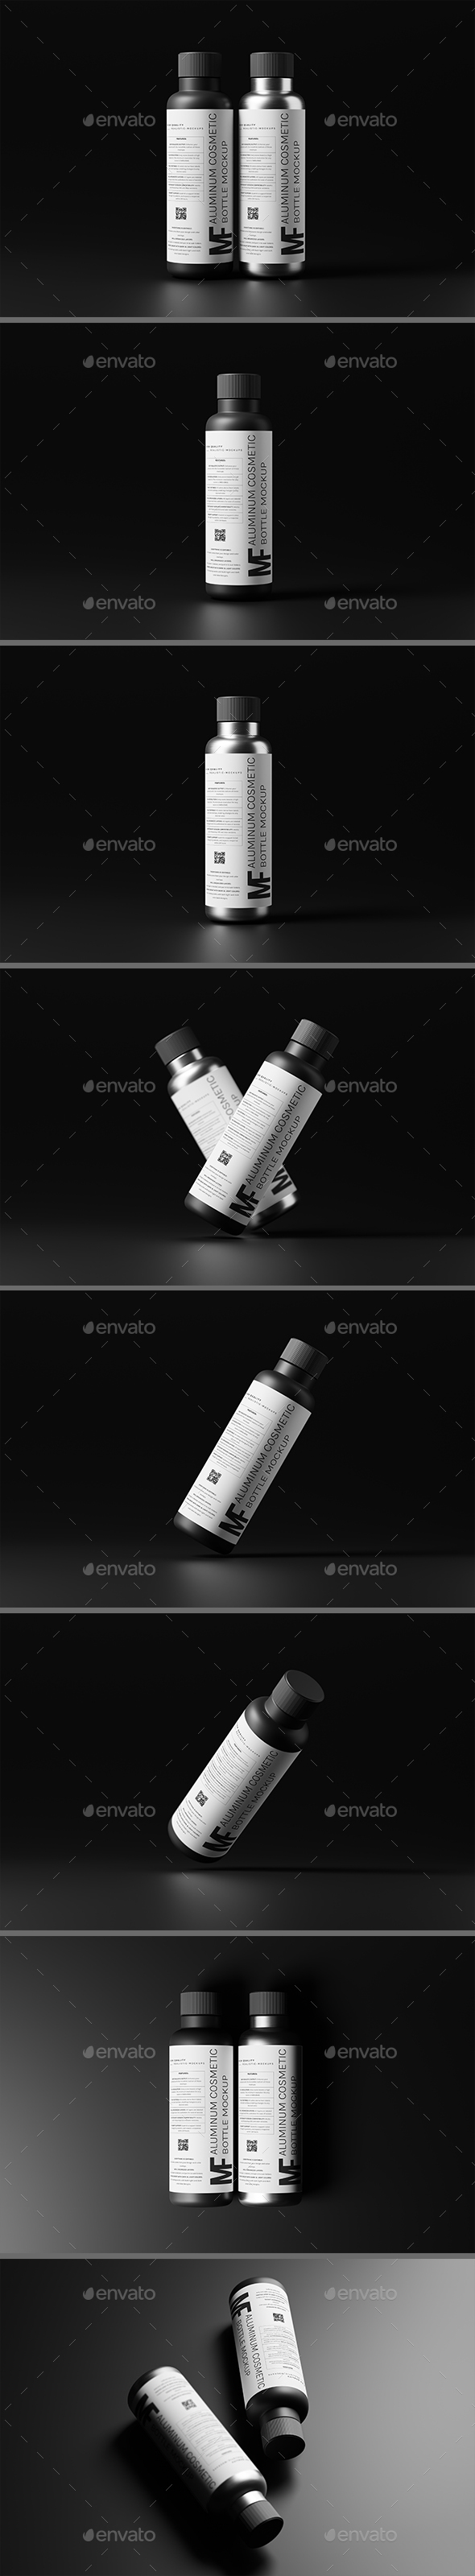 Aluminum Cosmetic Bottle Duo Mockup